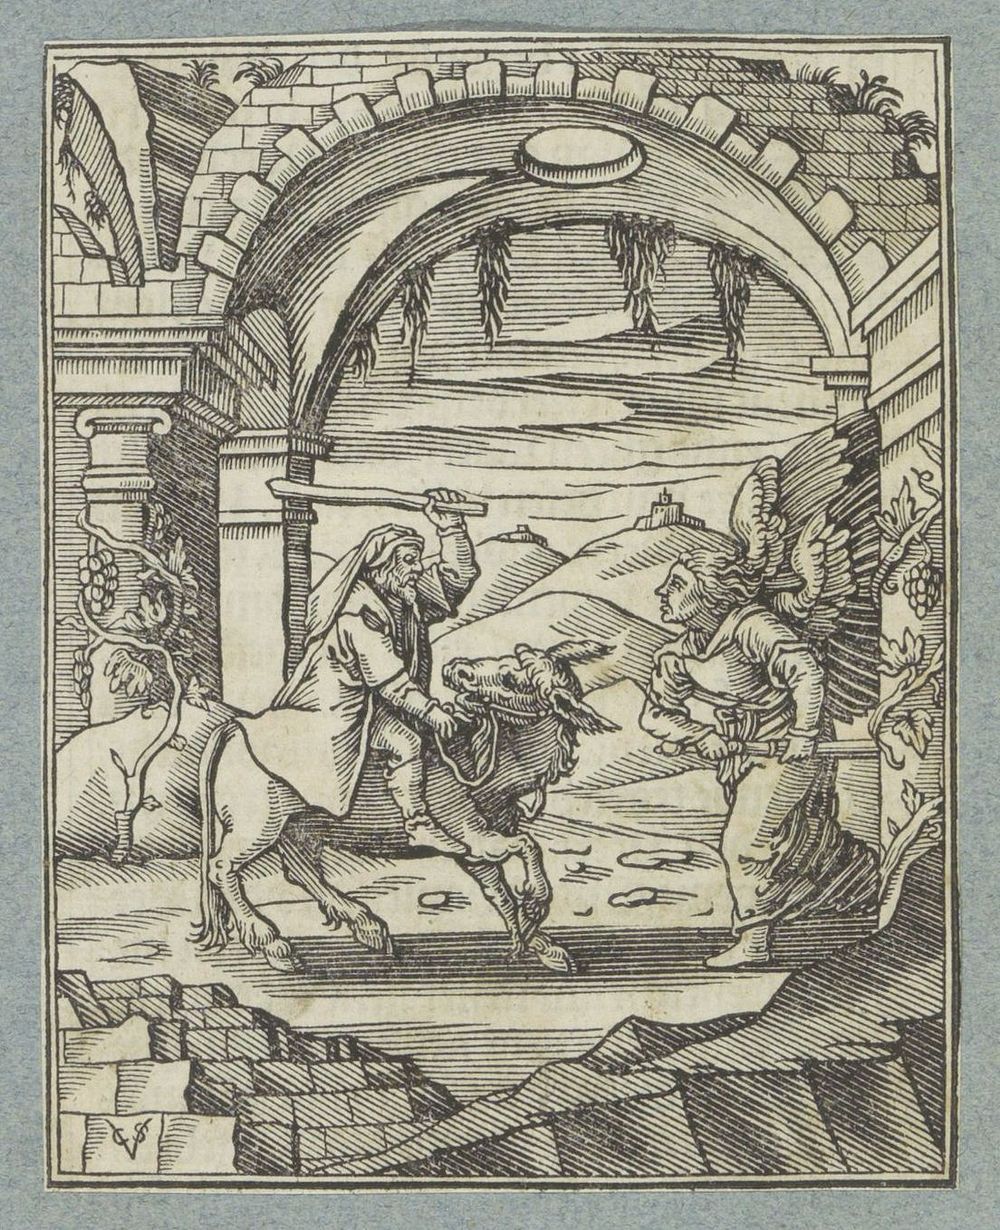 Bileam en de ezel (1645 - 1646) by Christoffel van Sichem II, Christoffel van Sichem III and Pieter Jacobsz Paets